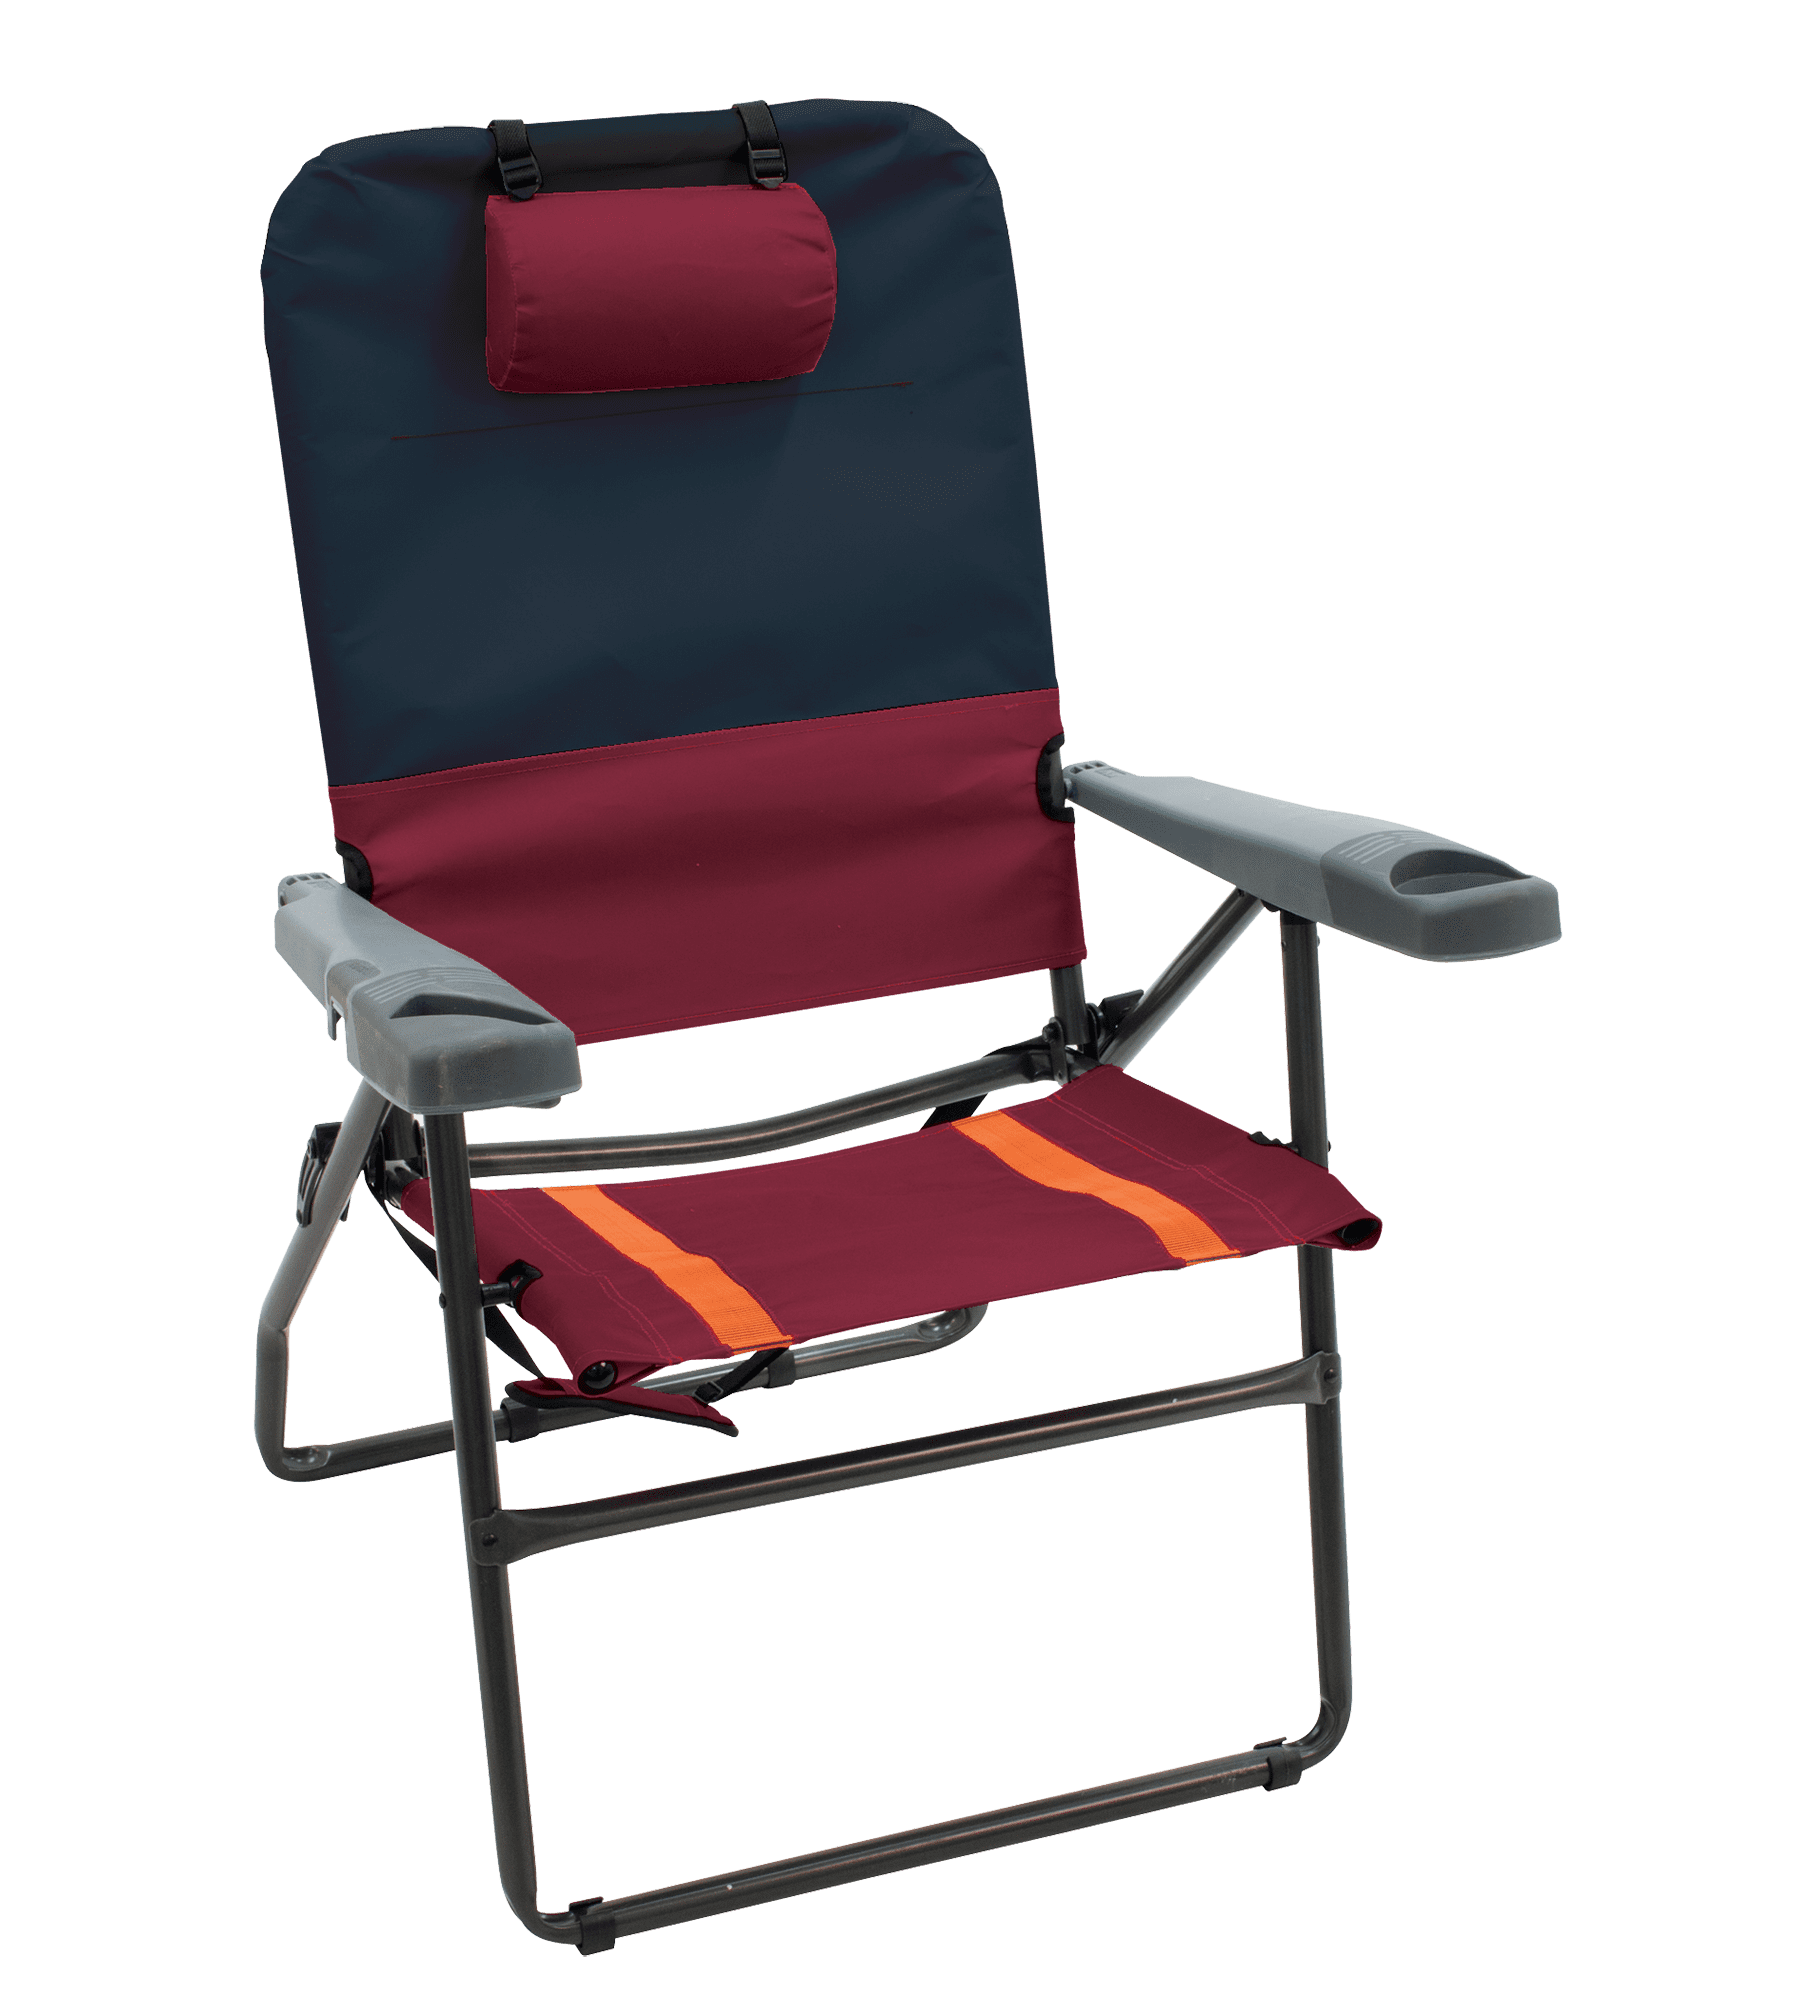 Creatice 4 Position Beach Chair for Simple Design